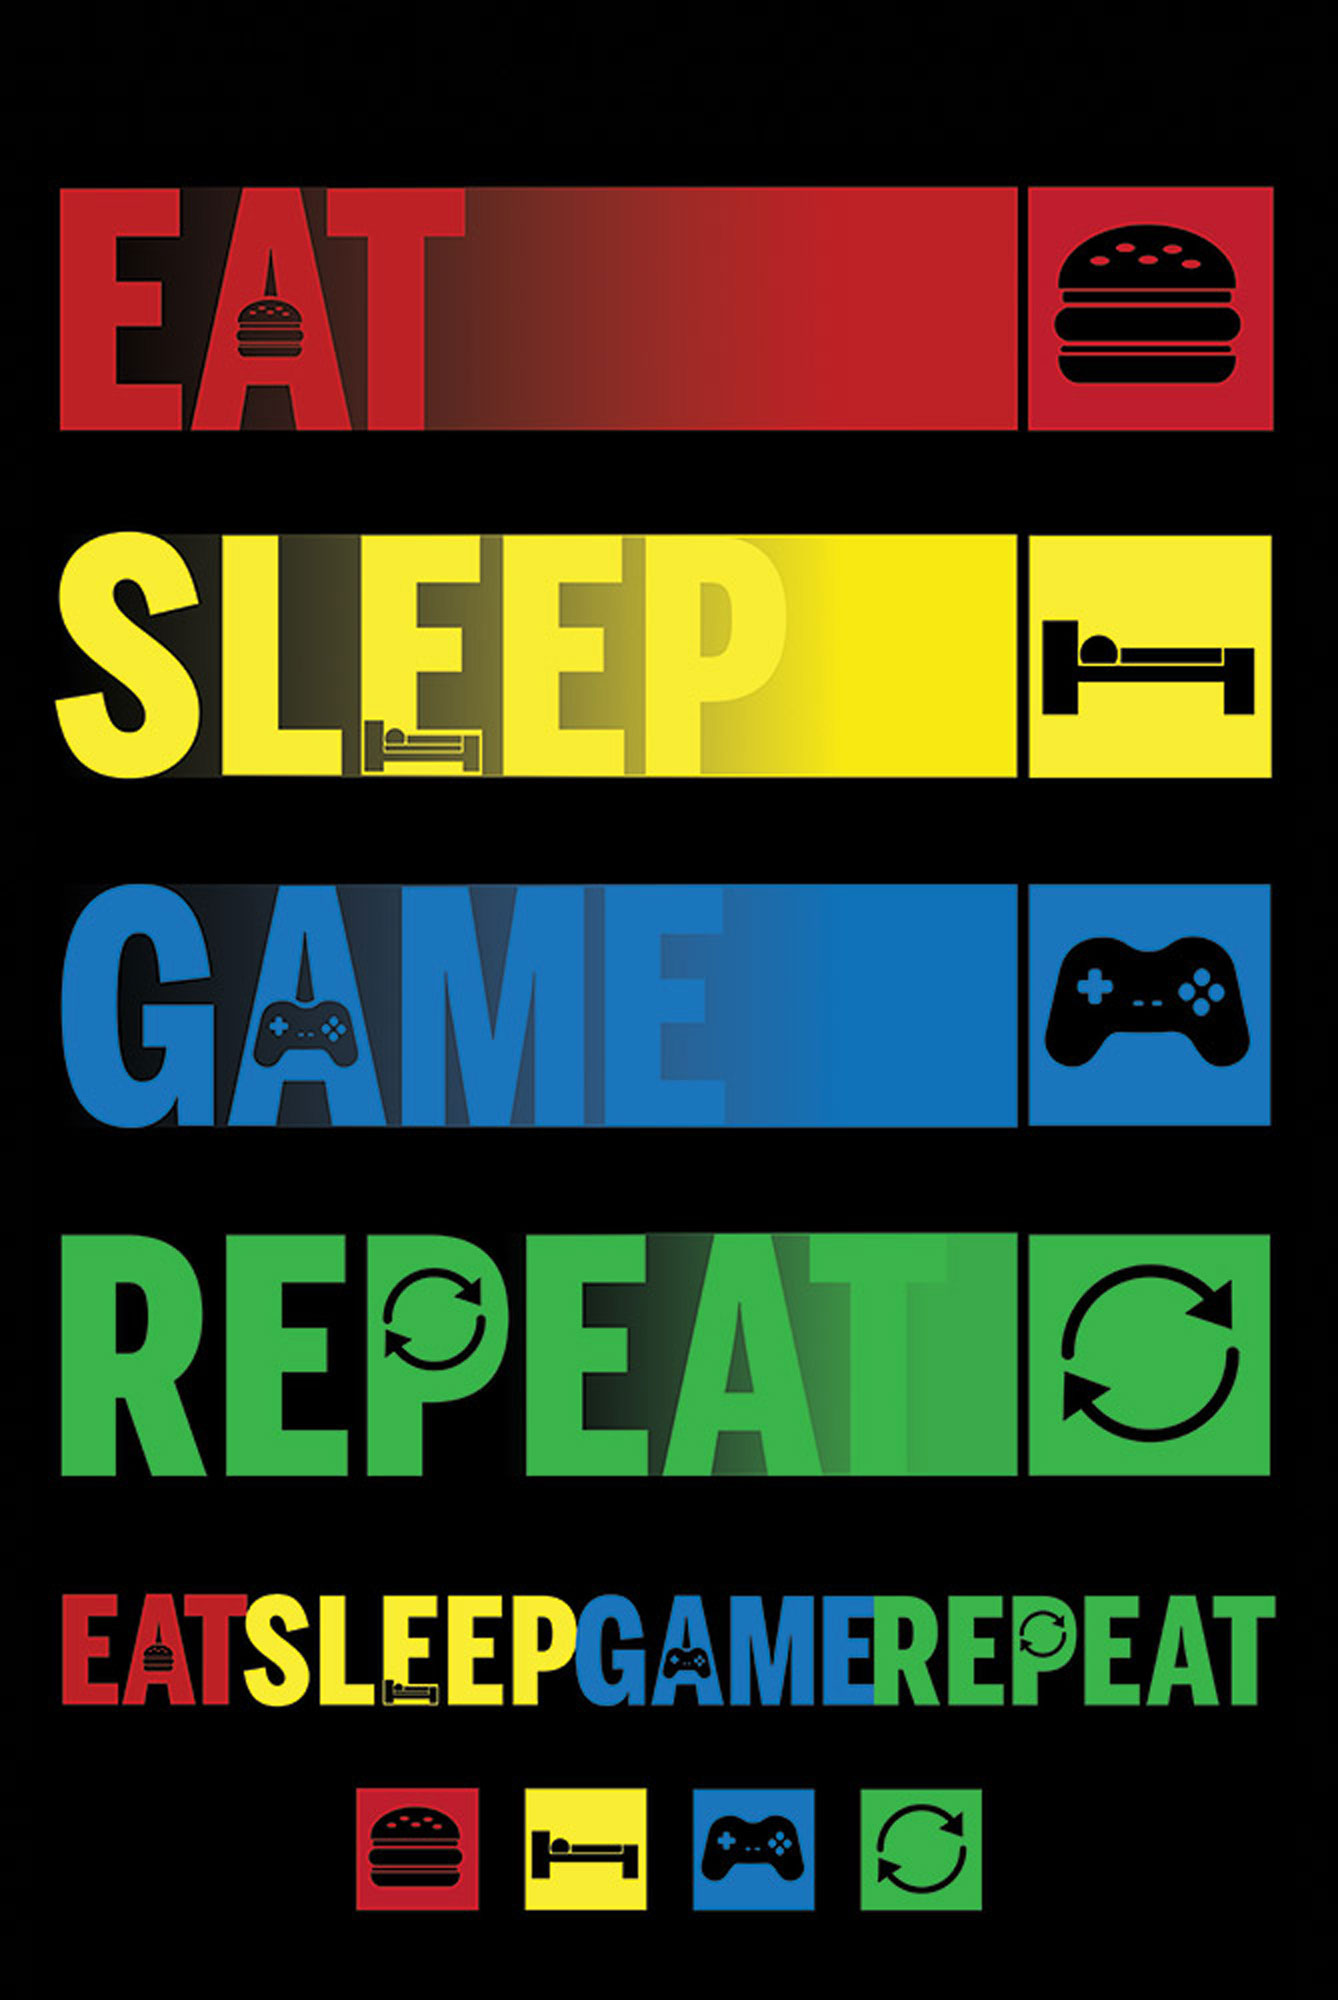 Game, Repeat - Gaming Sleep, Eat,